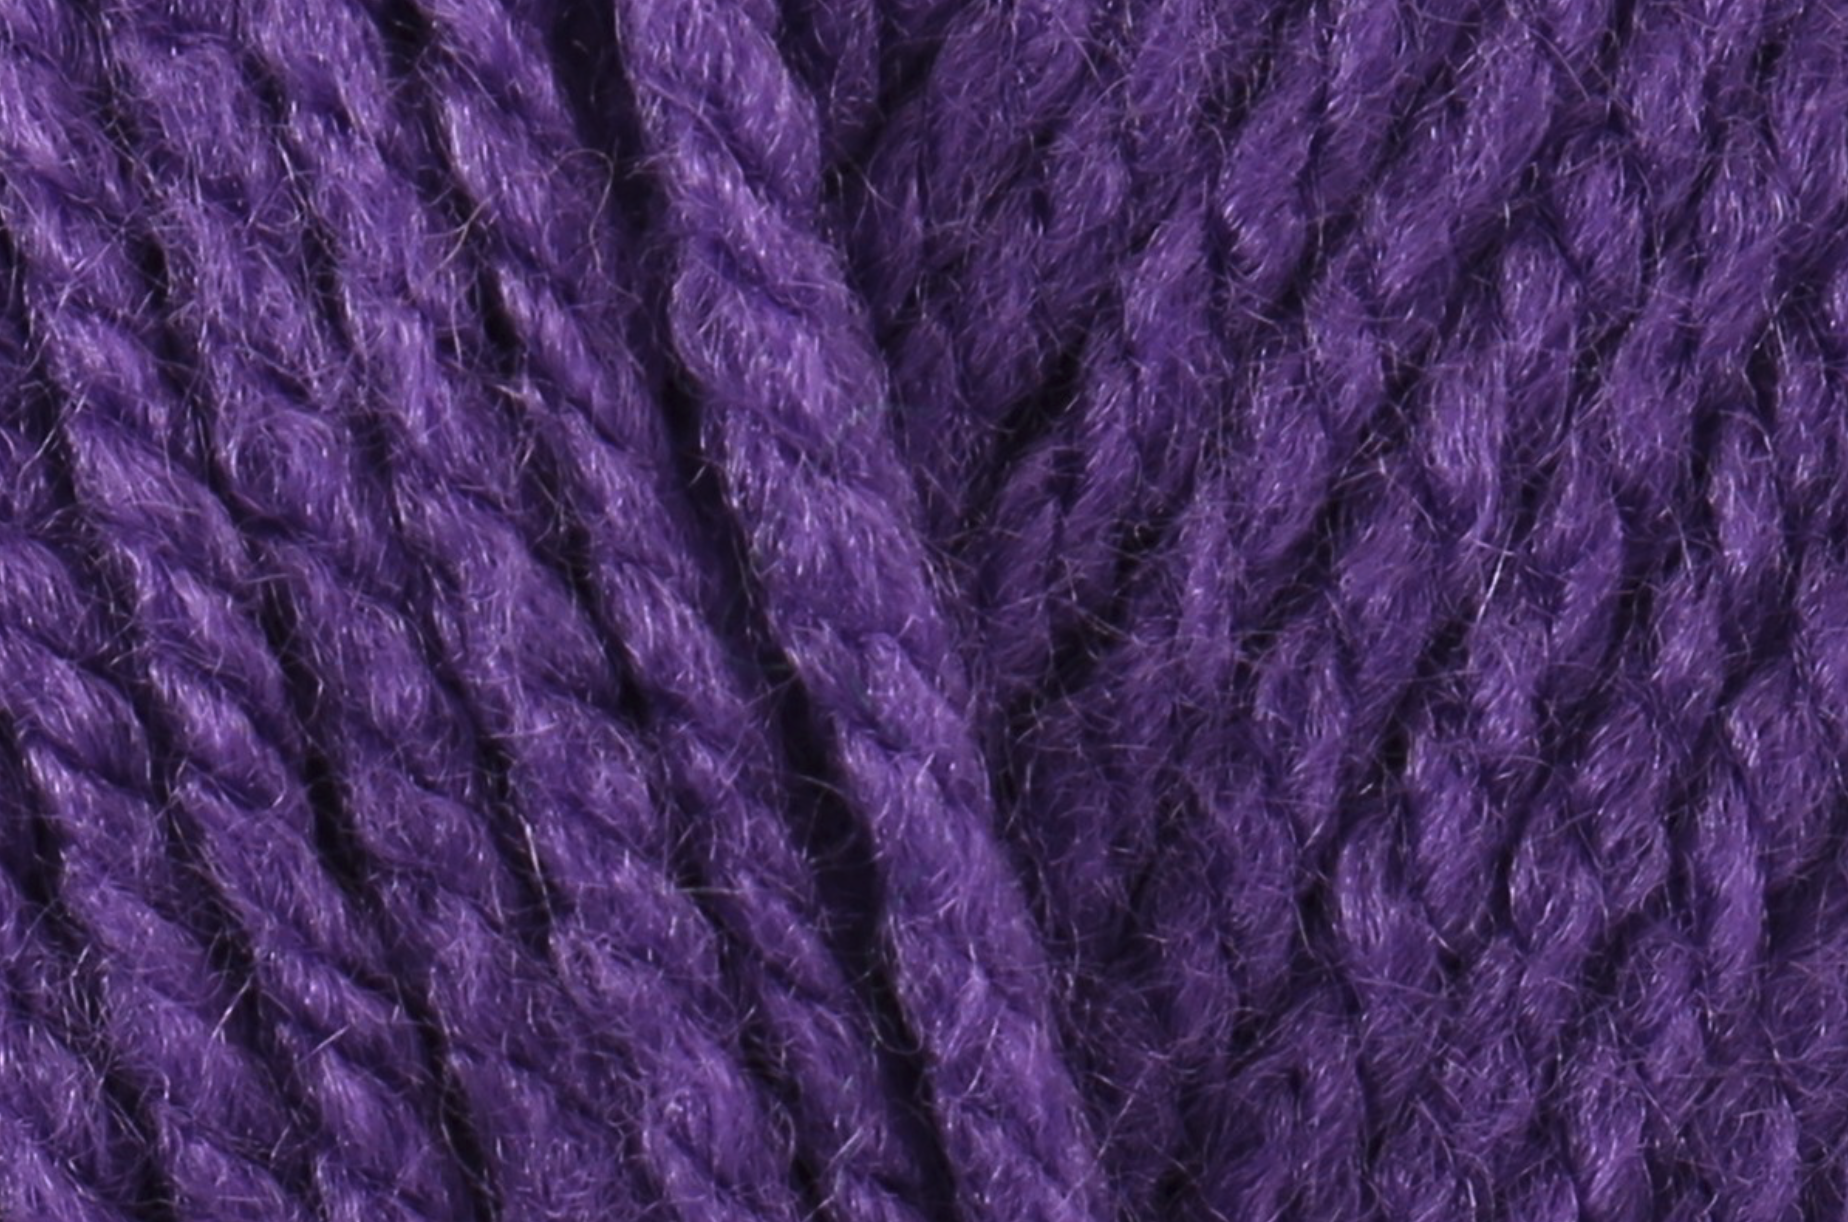 Stylecraft special Aran in the colour proper purple 1855